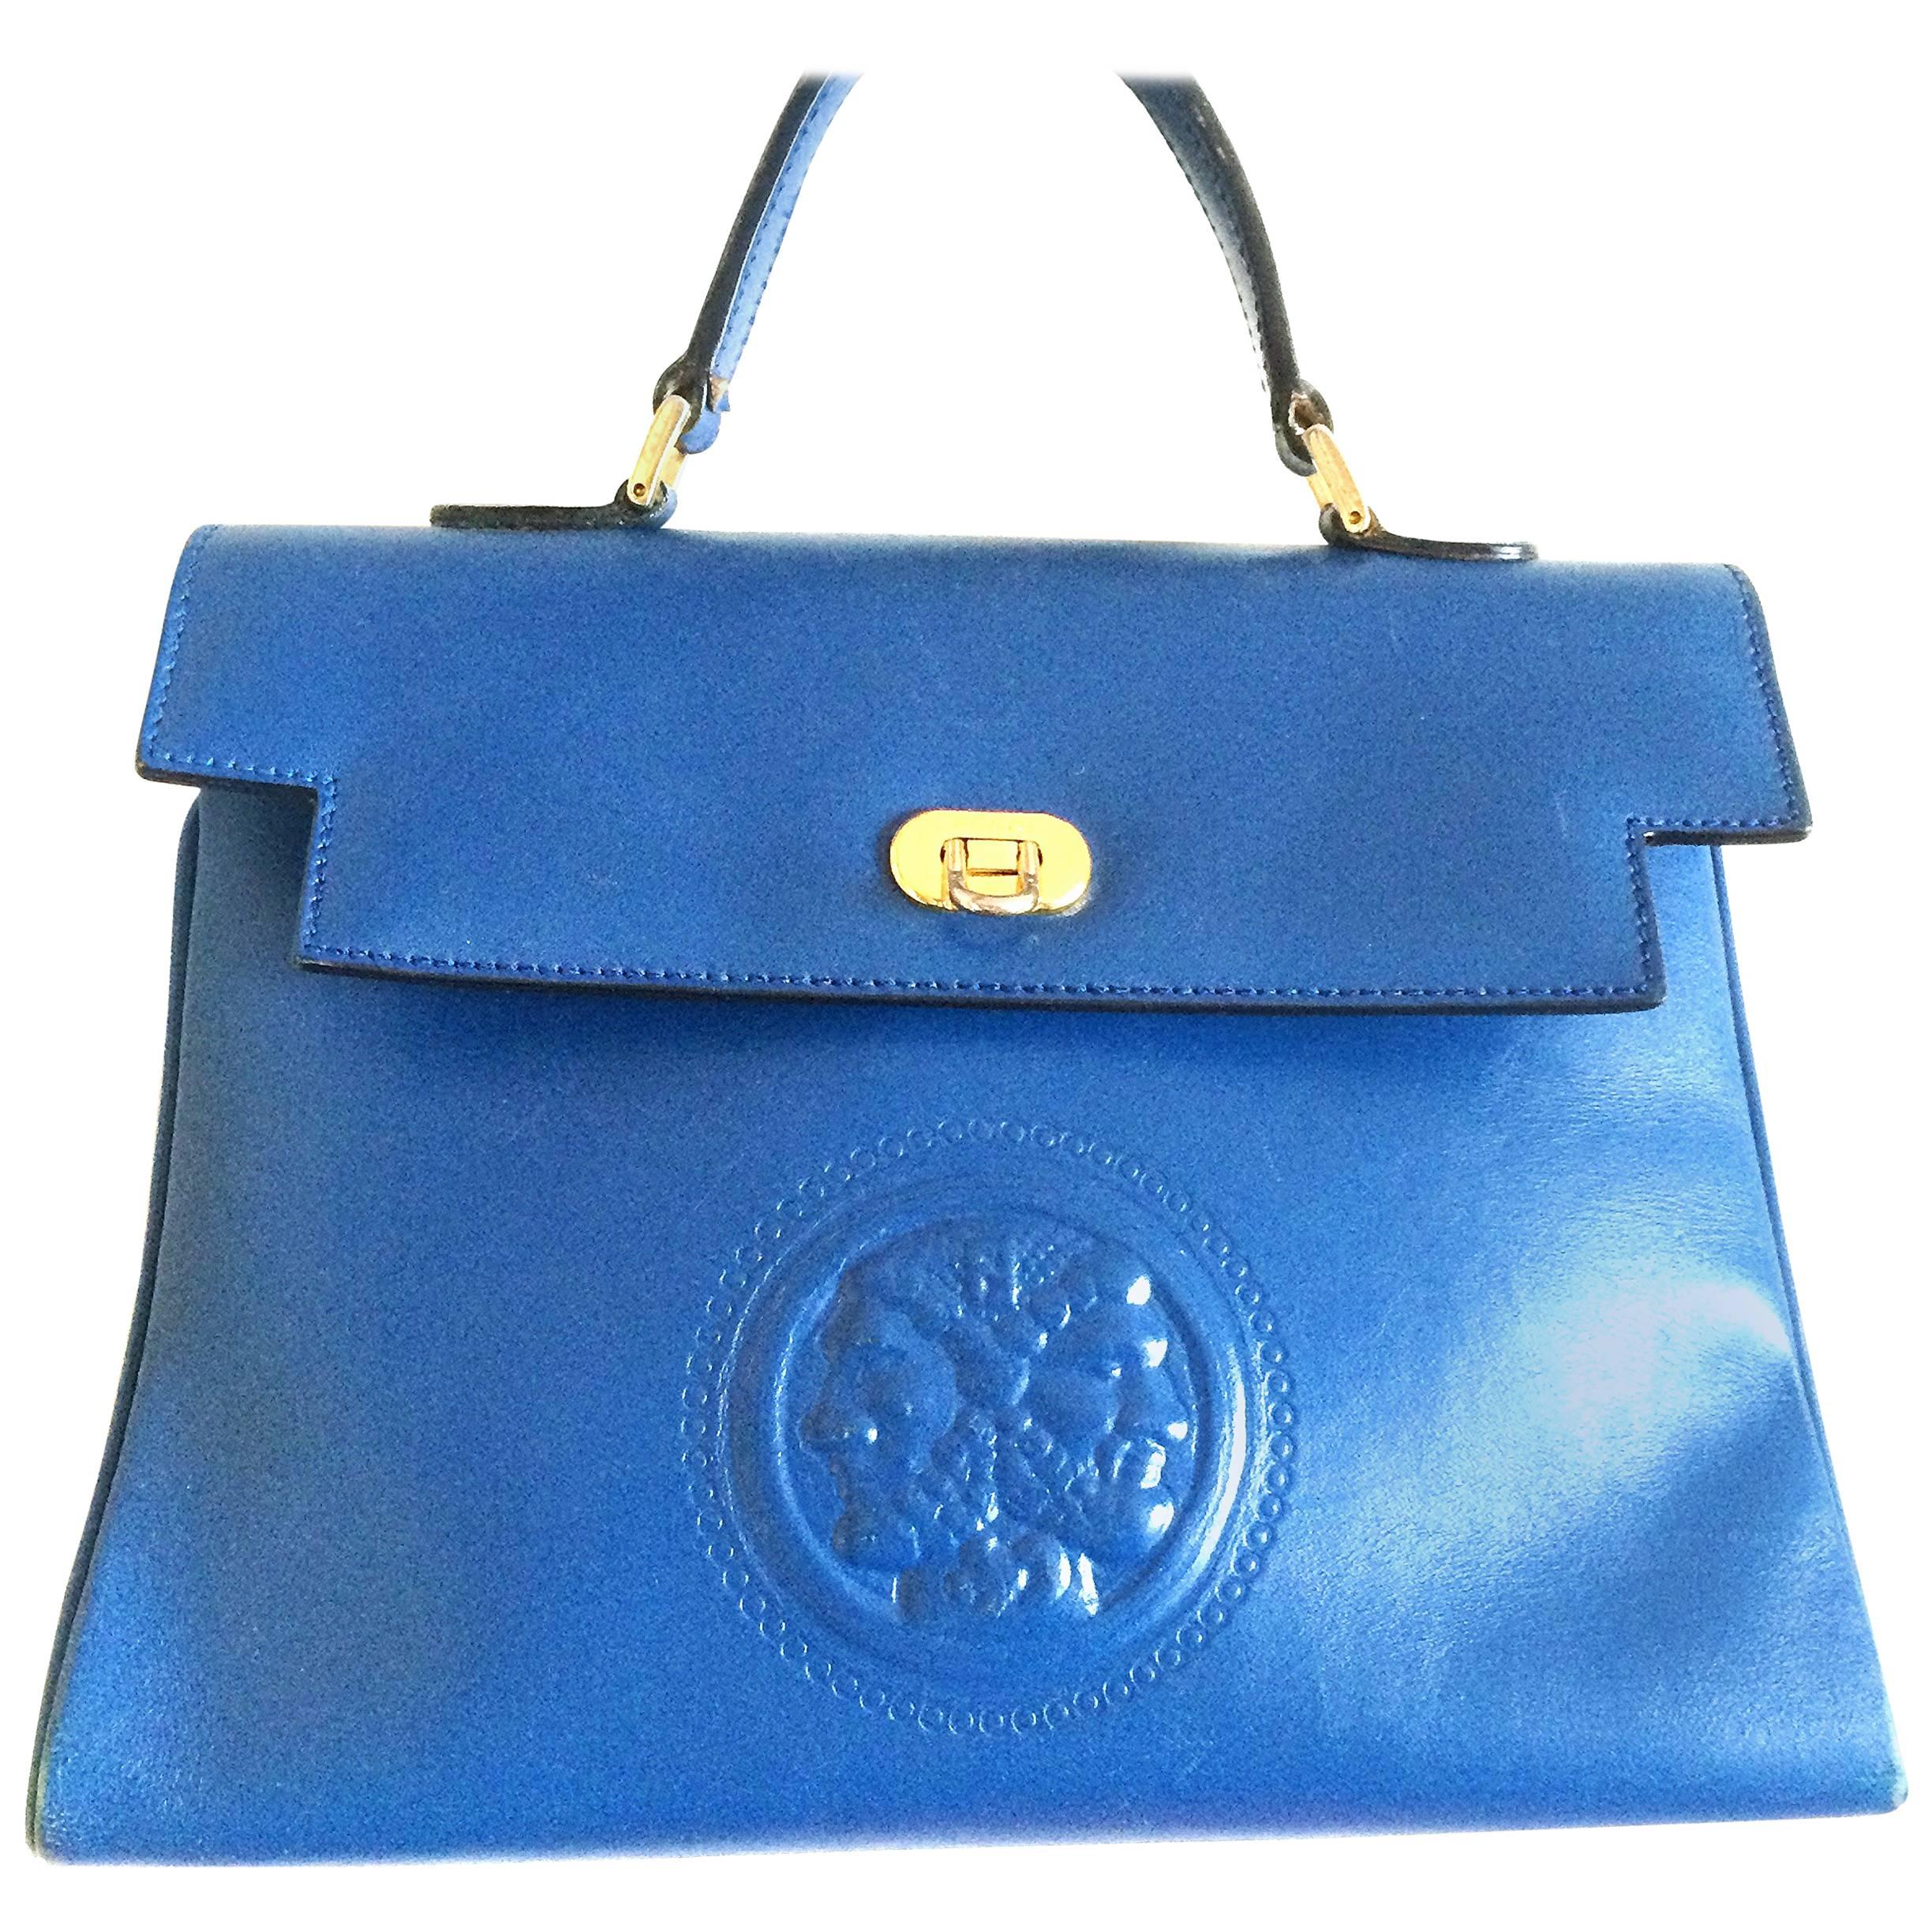 Vintage FENDI blue leather classic kelly style handbag with iconic Janus motif. For Sale